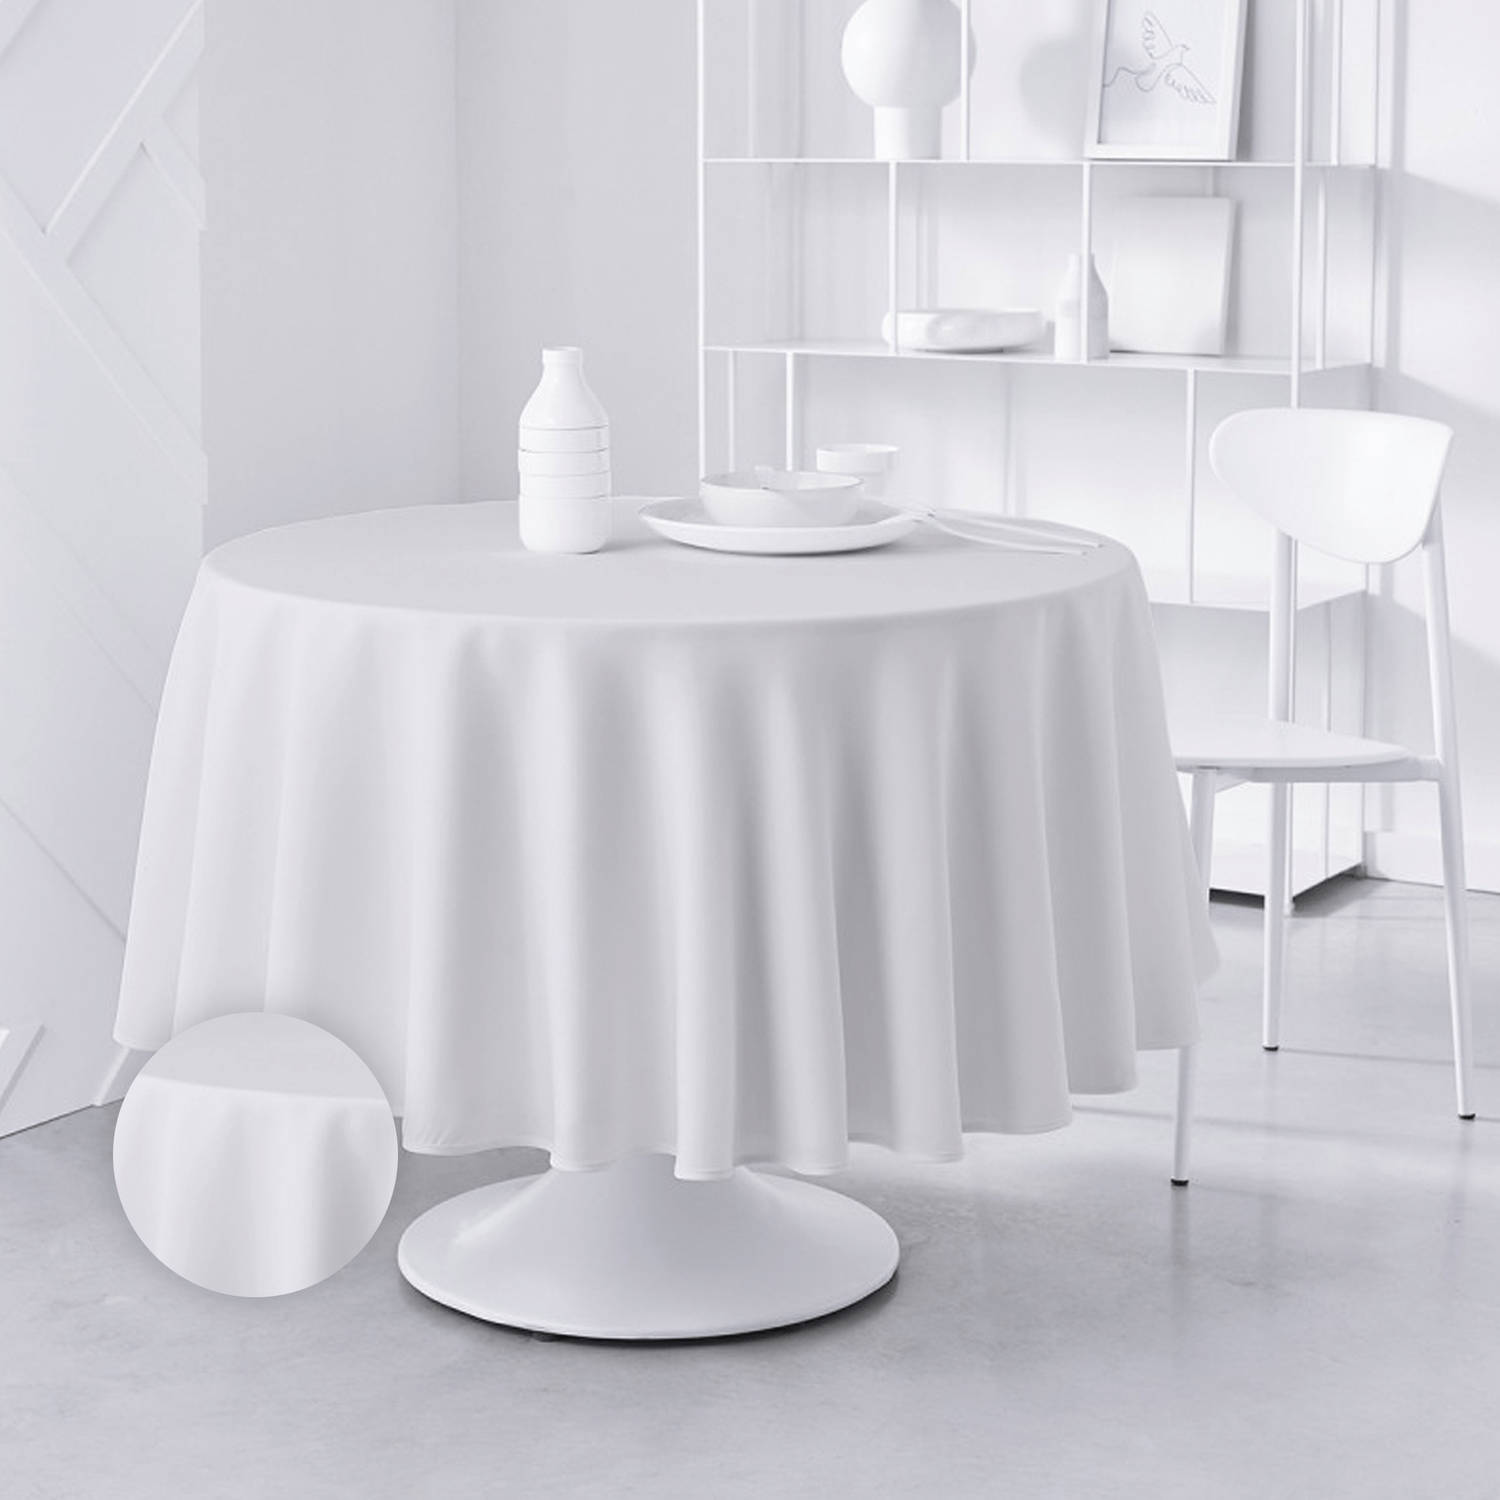 bovenstaand Analist Huiskamer Today Rond Tafelkleed - Tafellaken wit - Wit tafelkleed rond Ø180 cm -  Polyester tafelkleed - Wit - wasbaar tafelkleed | Blokker